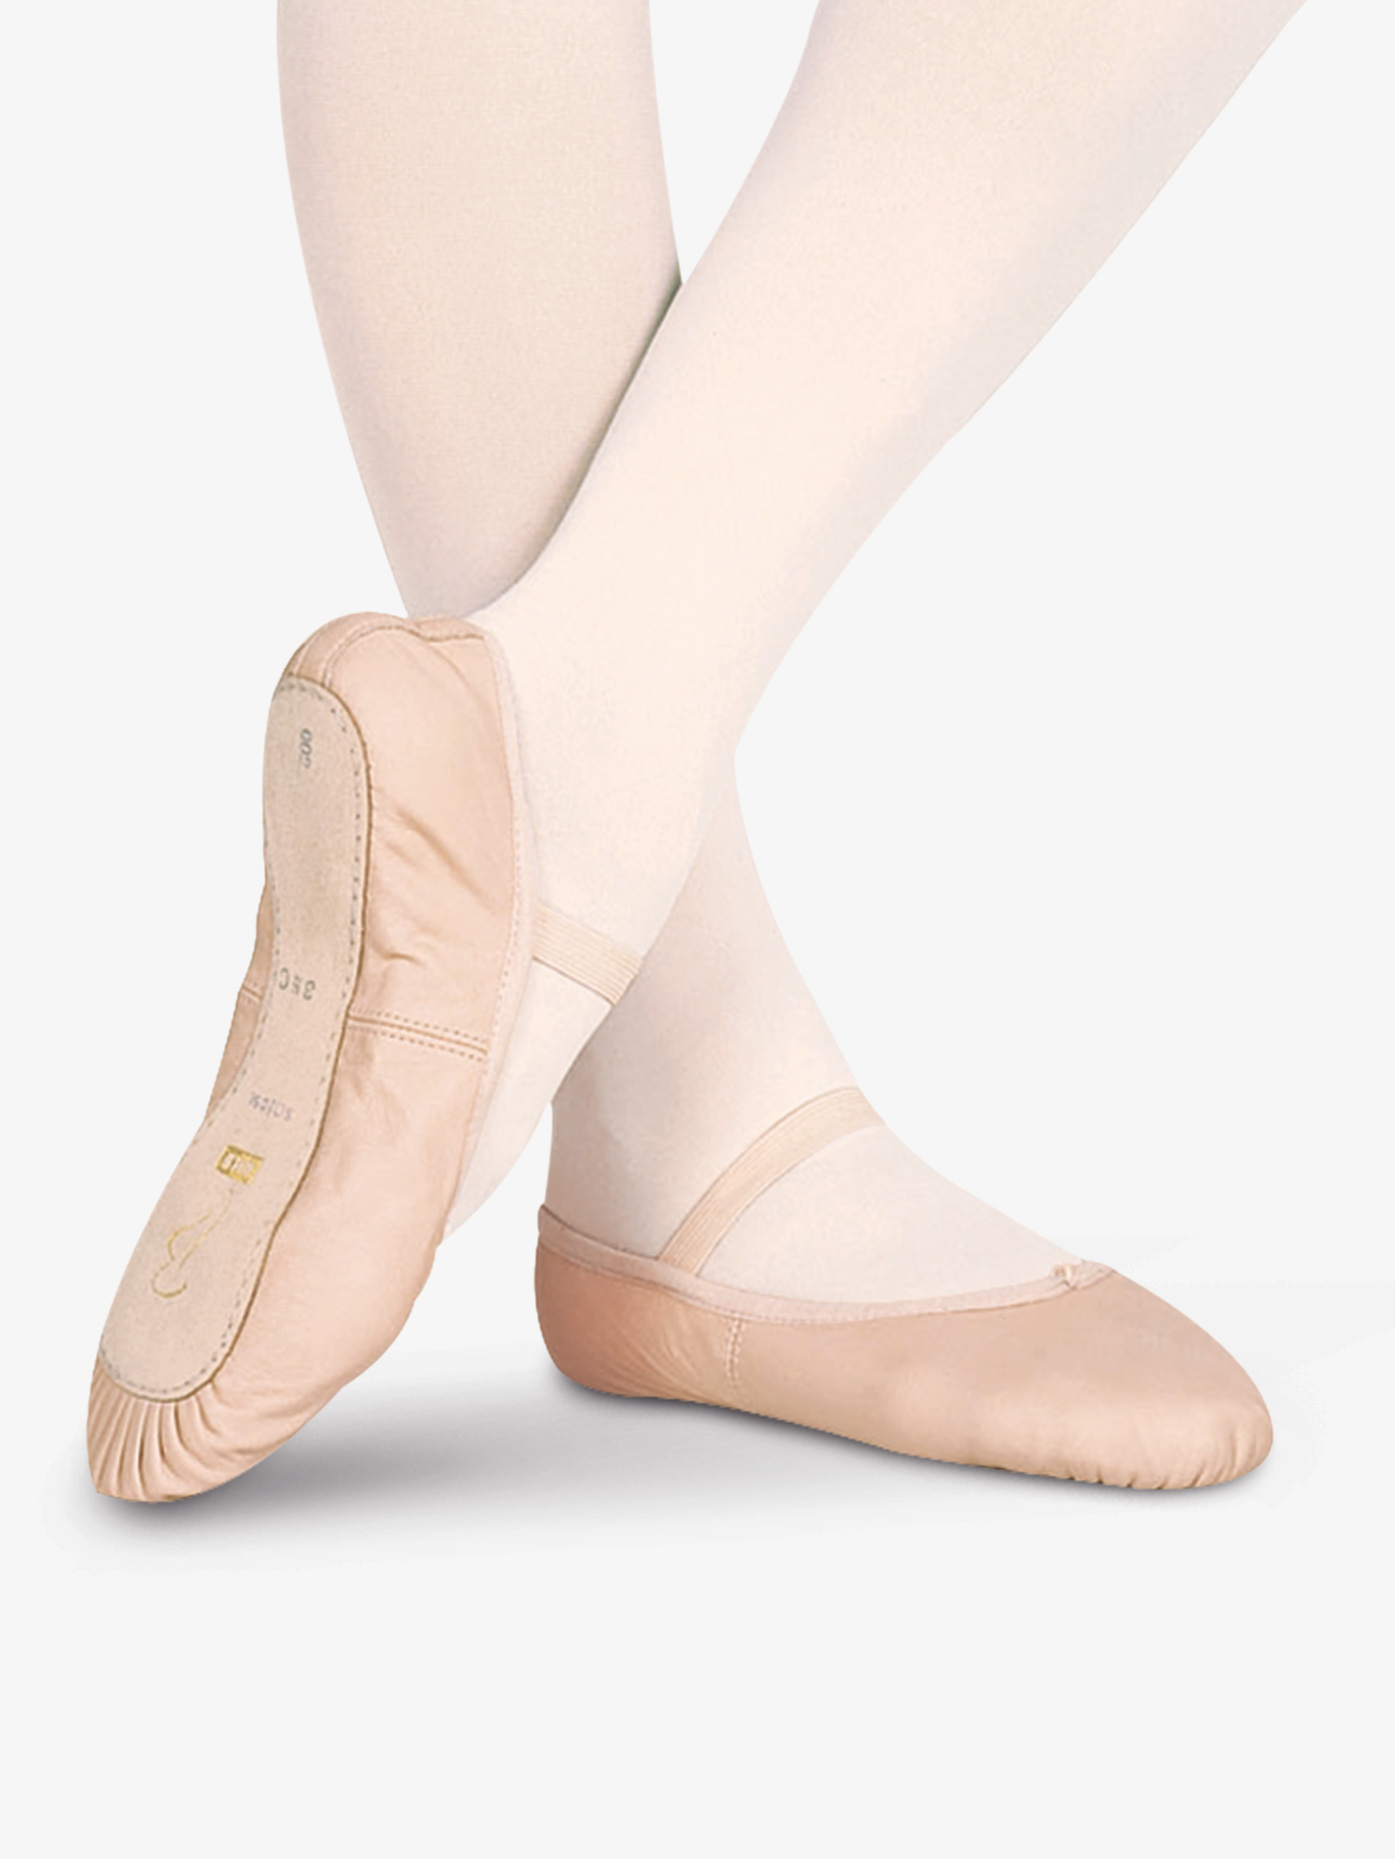 Women's Bloch Dansoft Ballet Dance Shoes Pink Leather 7E 8B New!